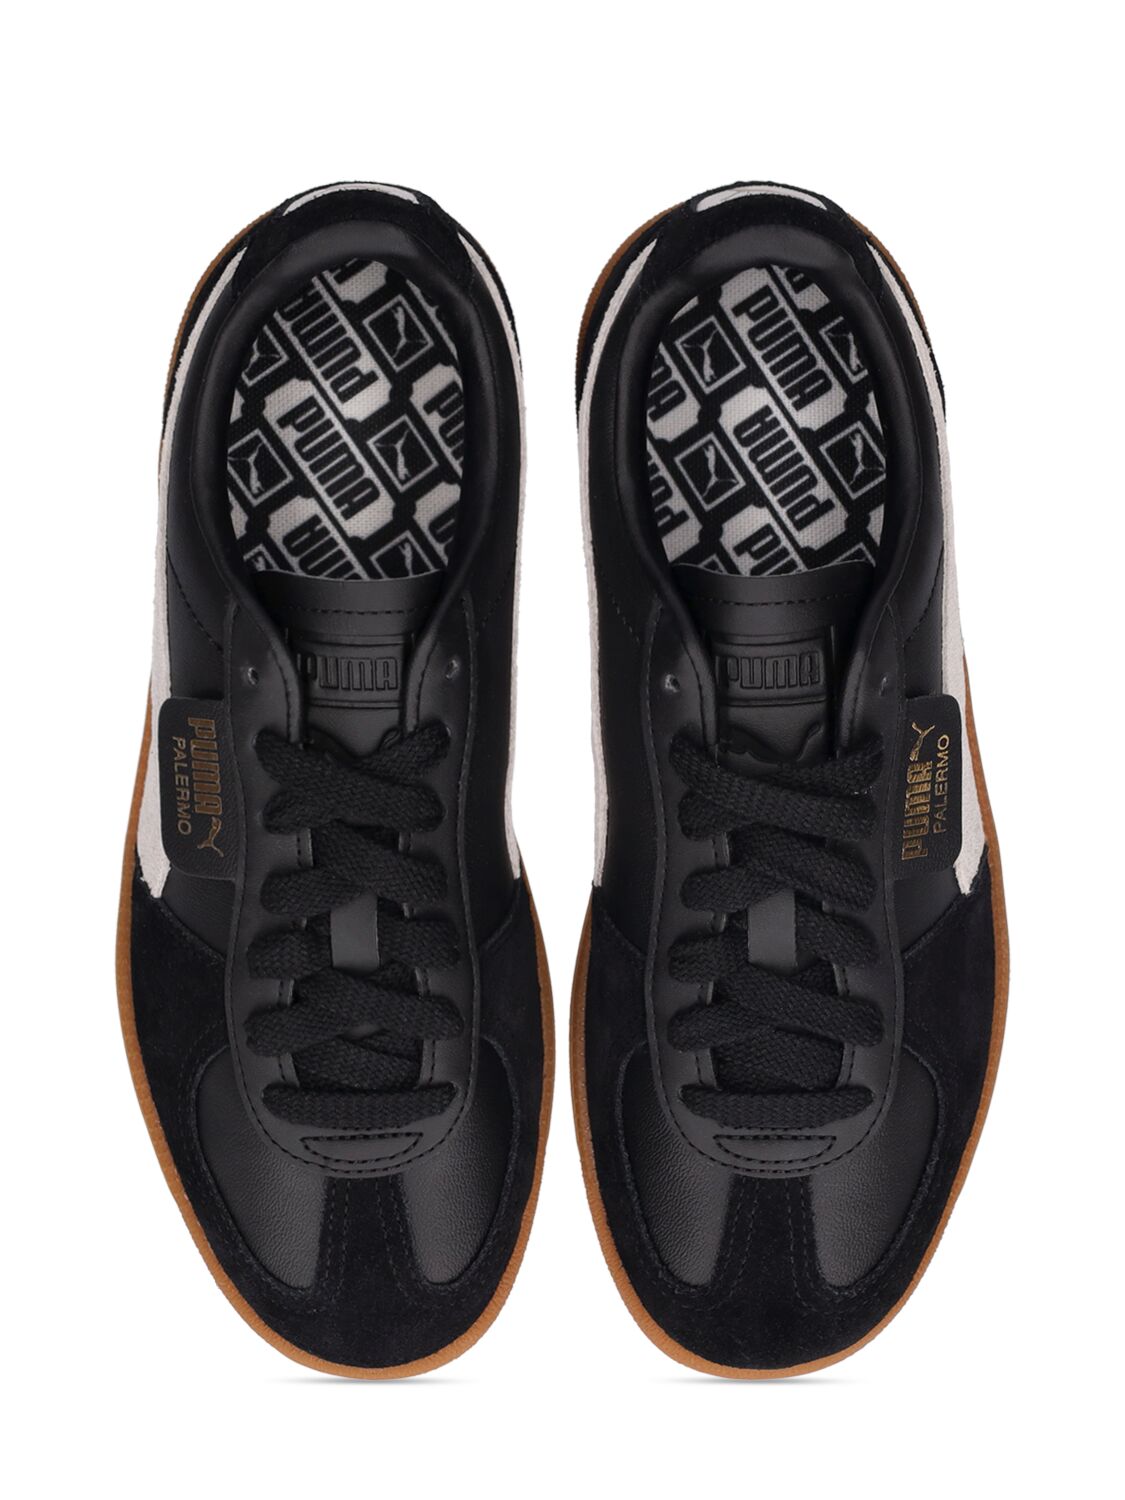 Shop Puma Palermo Lth Sneakers In Black